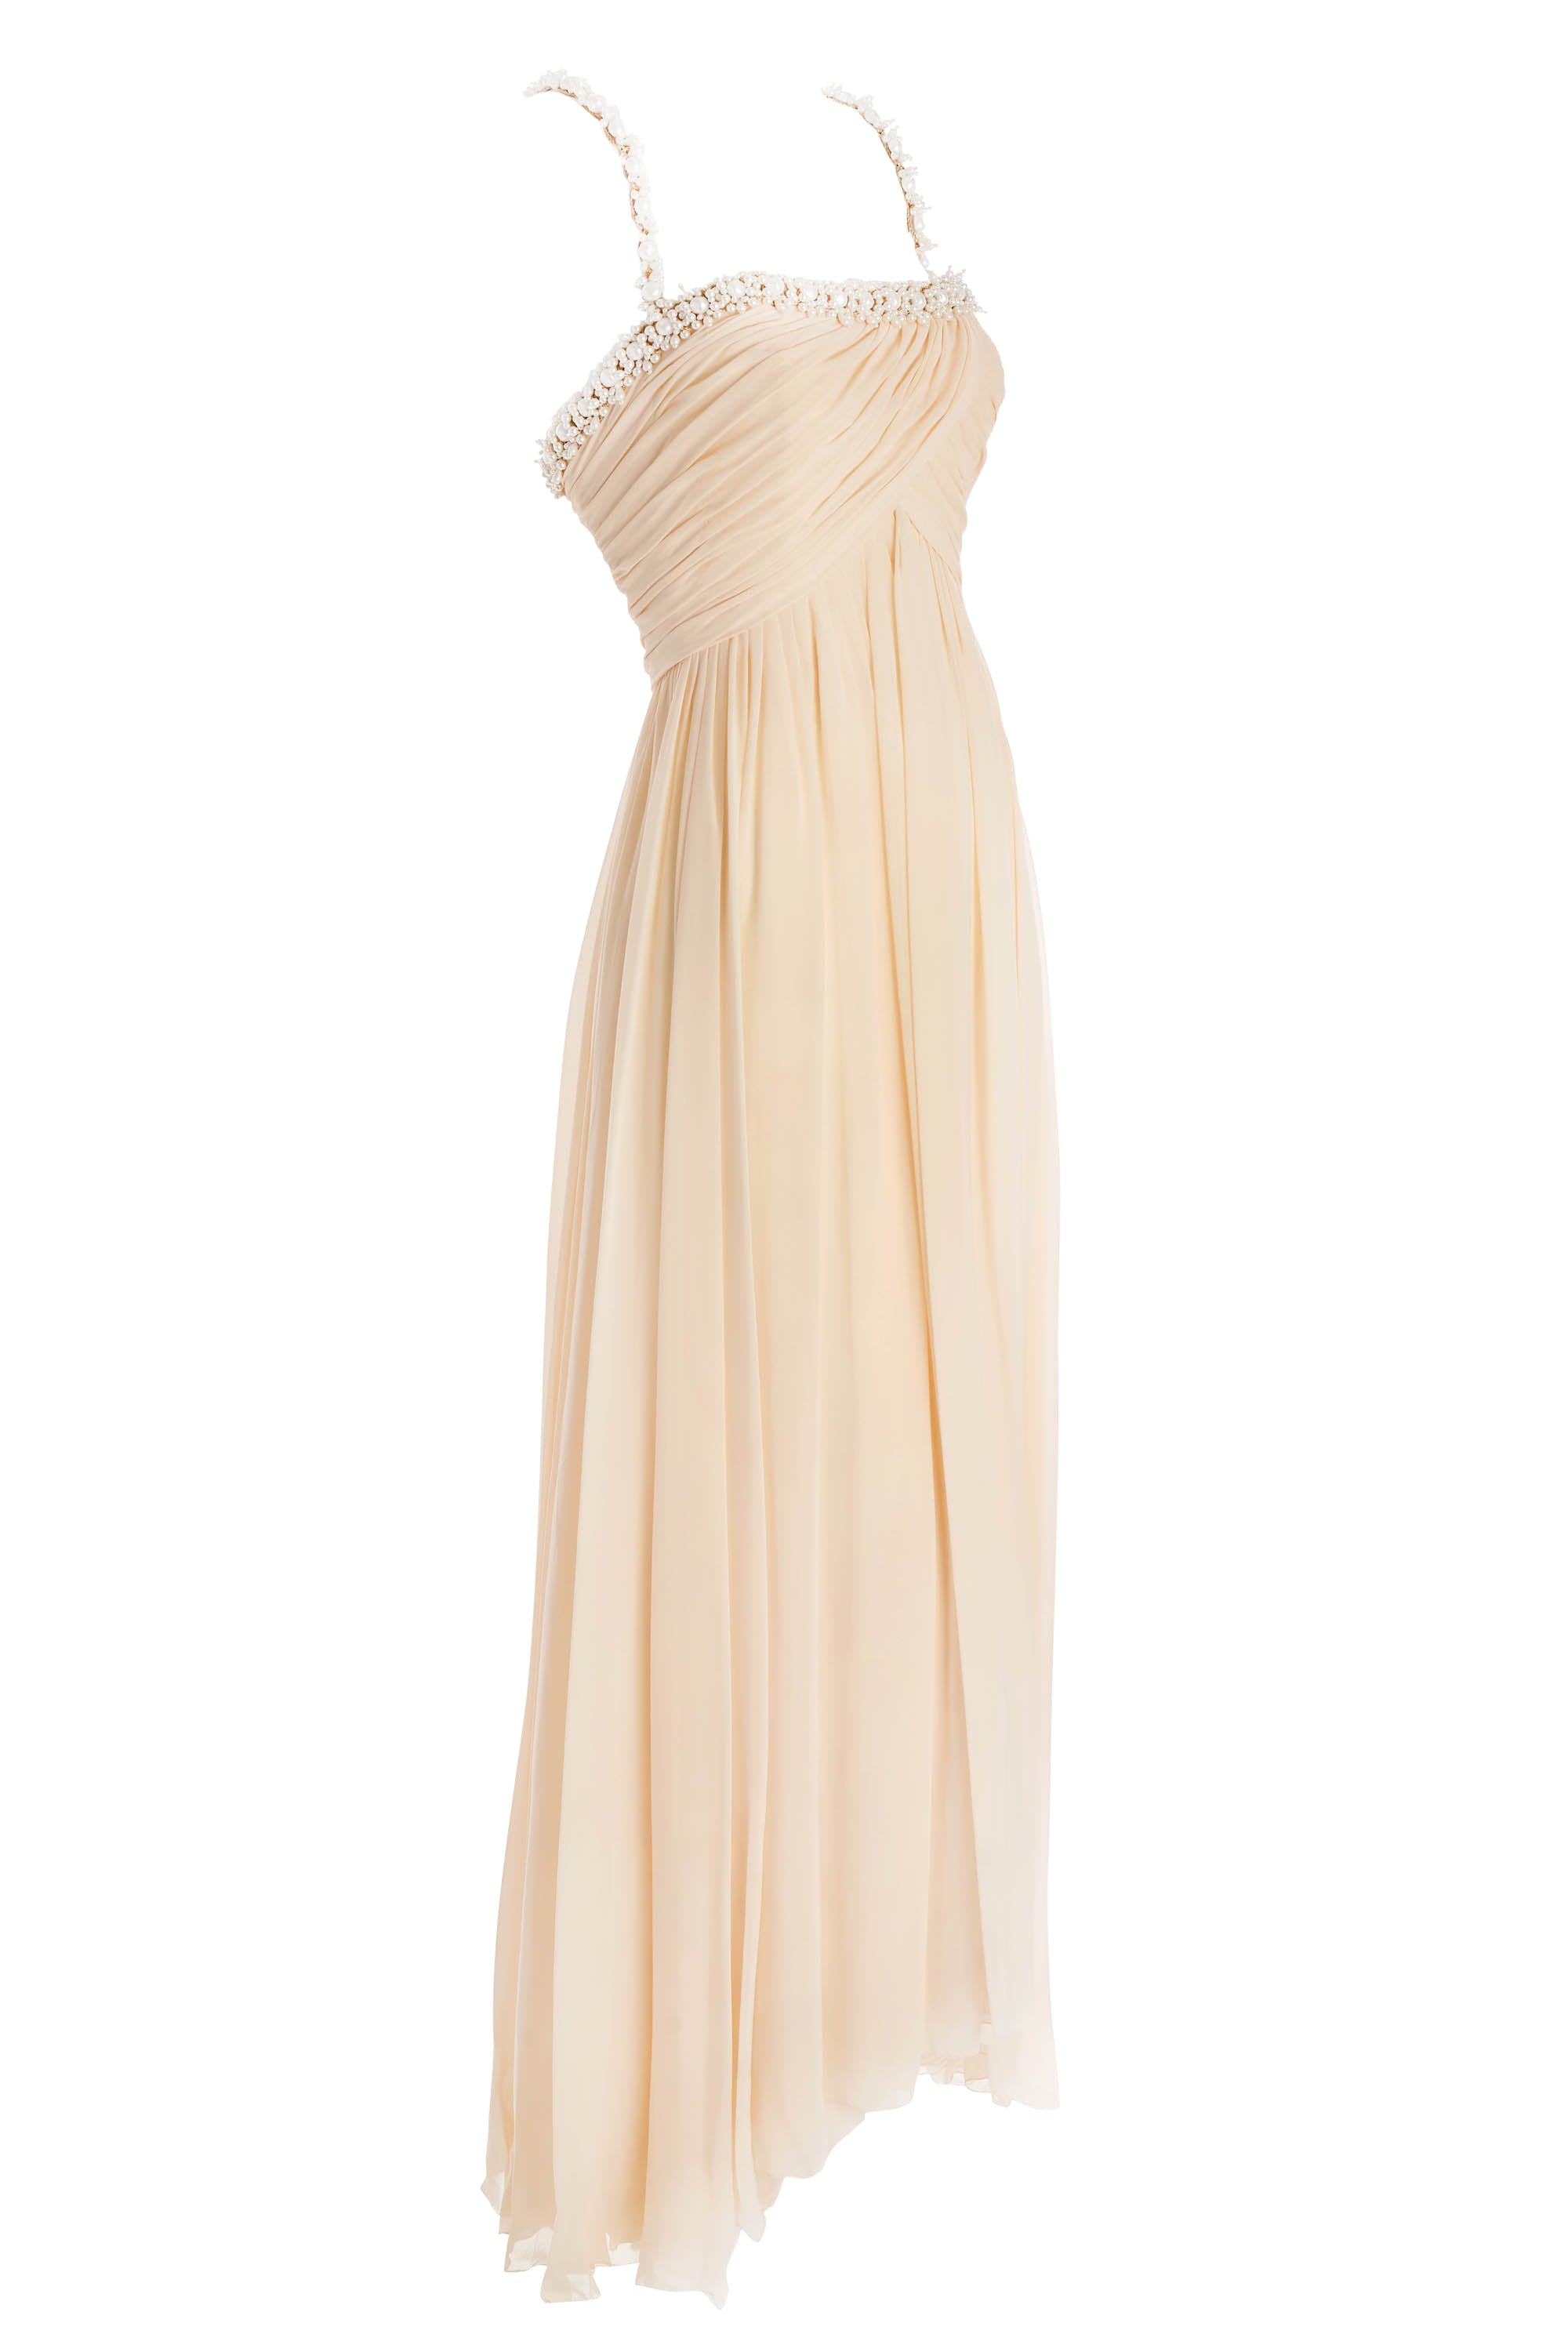 Chanel Ivory Chiffon Dress With Pearl Embellishments Size 38